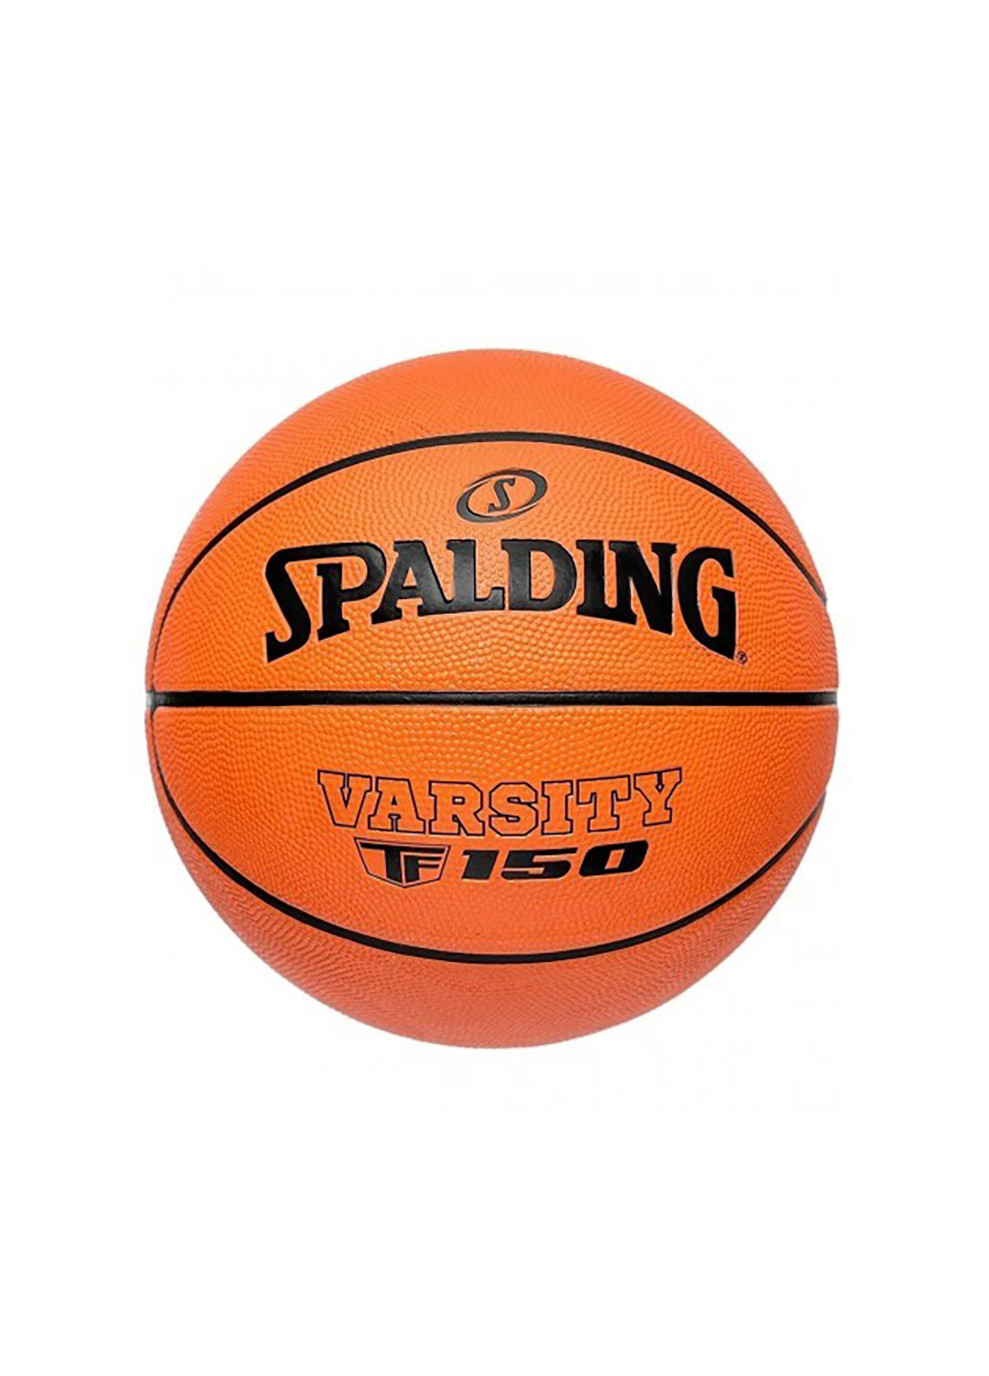 М'яч баскетбольний Varsity TF-150 FIBA помаранчевий Spalding (260646272)